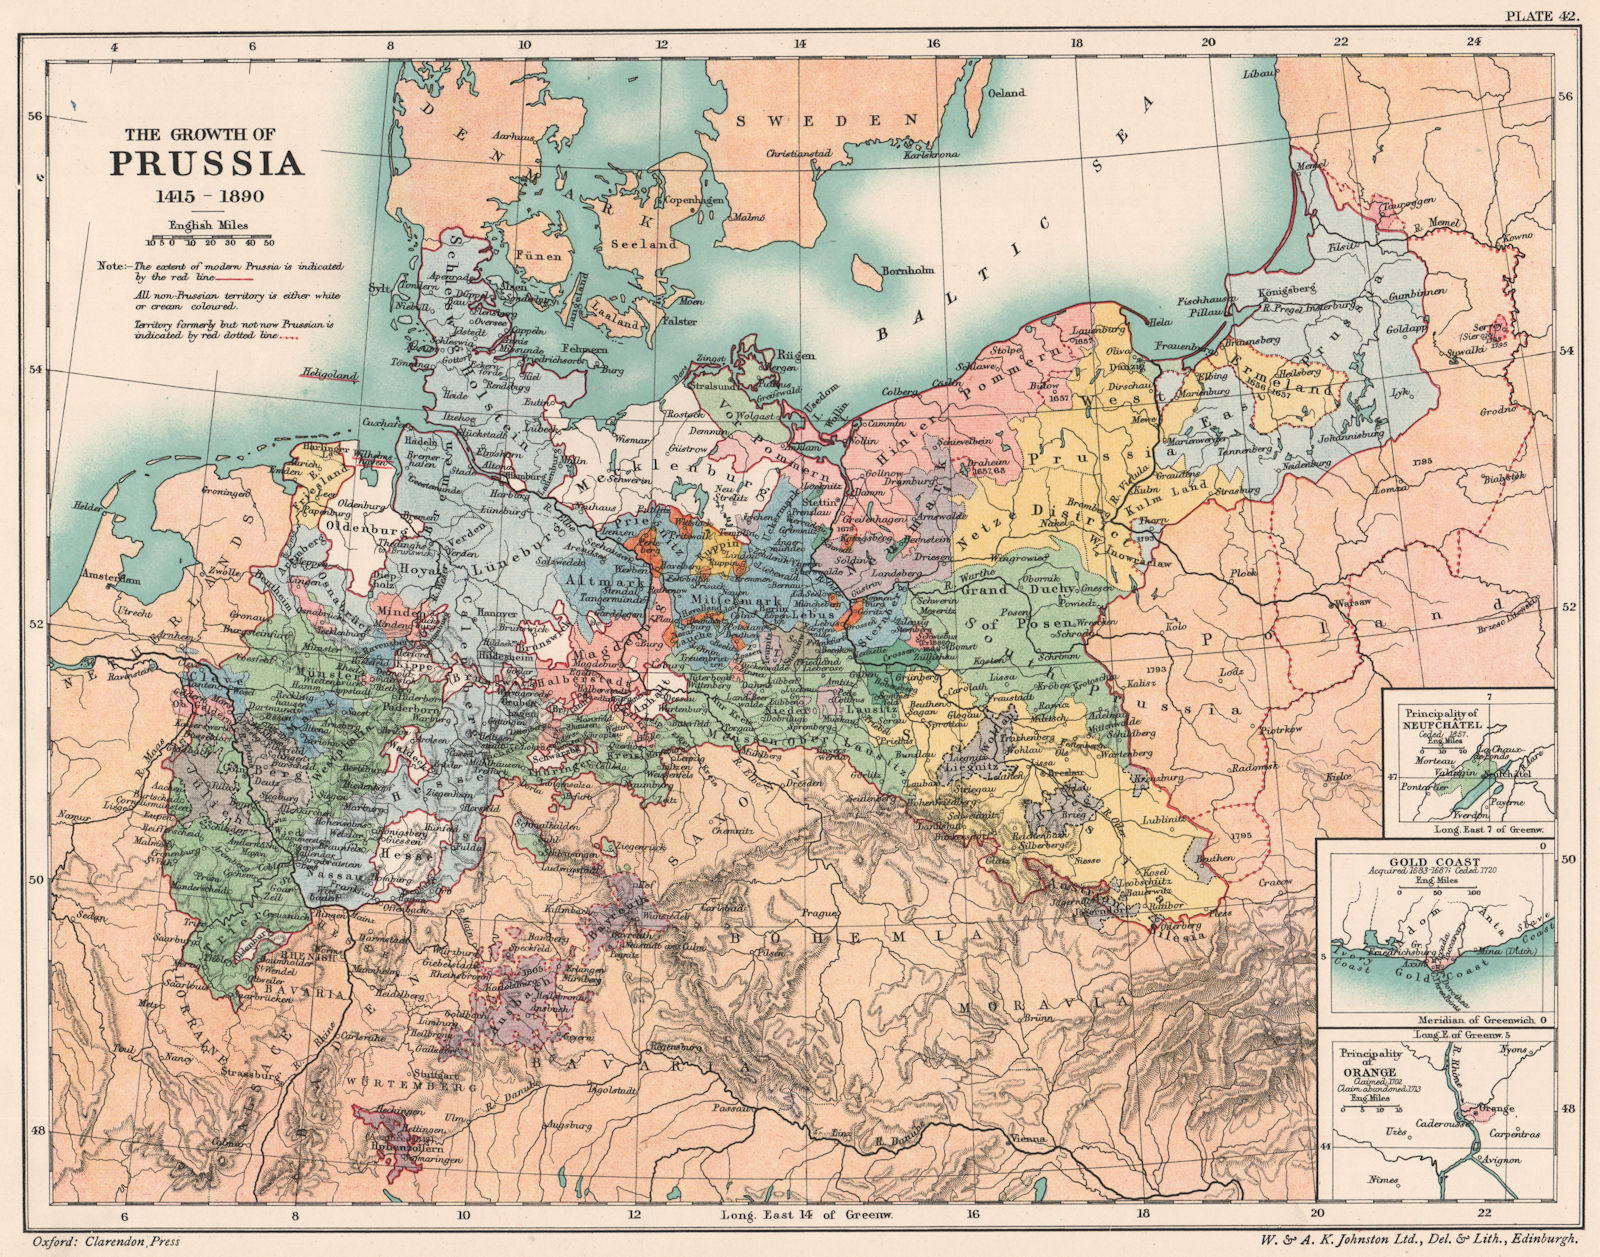 Associate Product PRUSSIA 1415-1890. Growth 15-19C. Neuchâtel Gold Coast (Ghana) Orange 1902 map